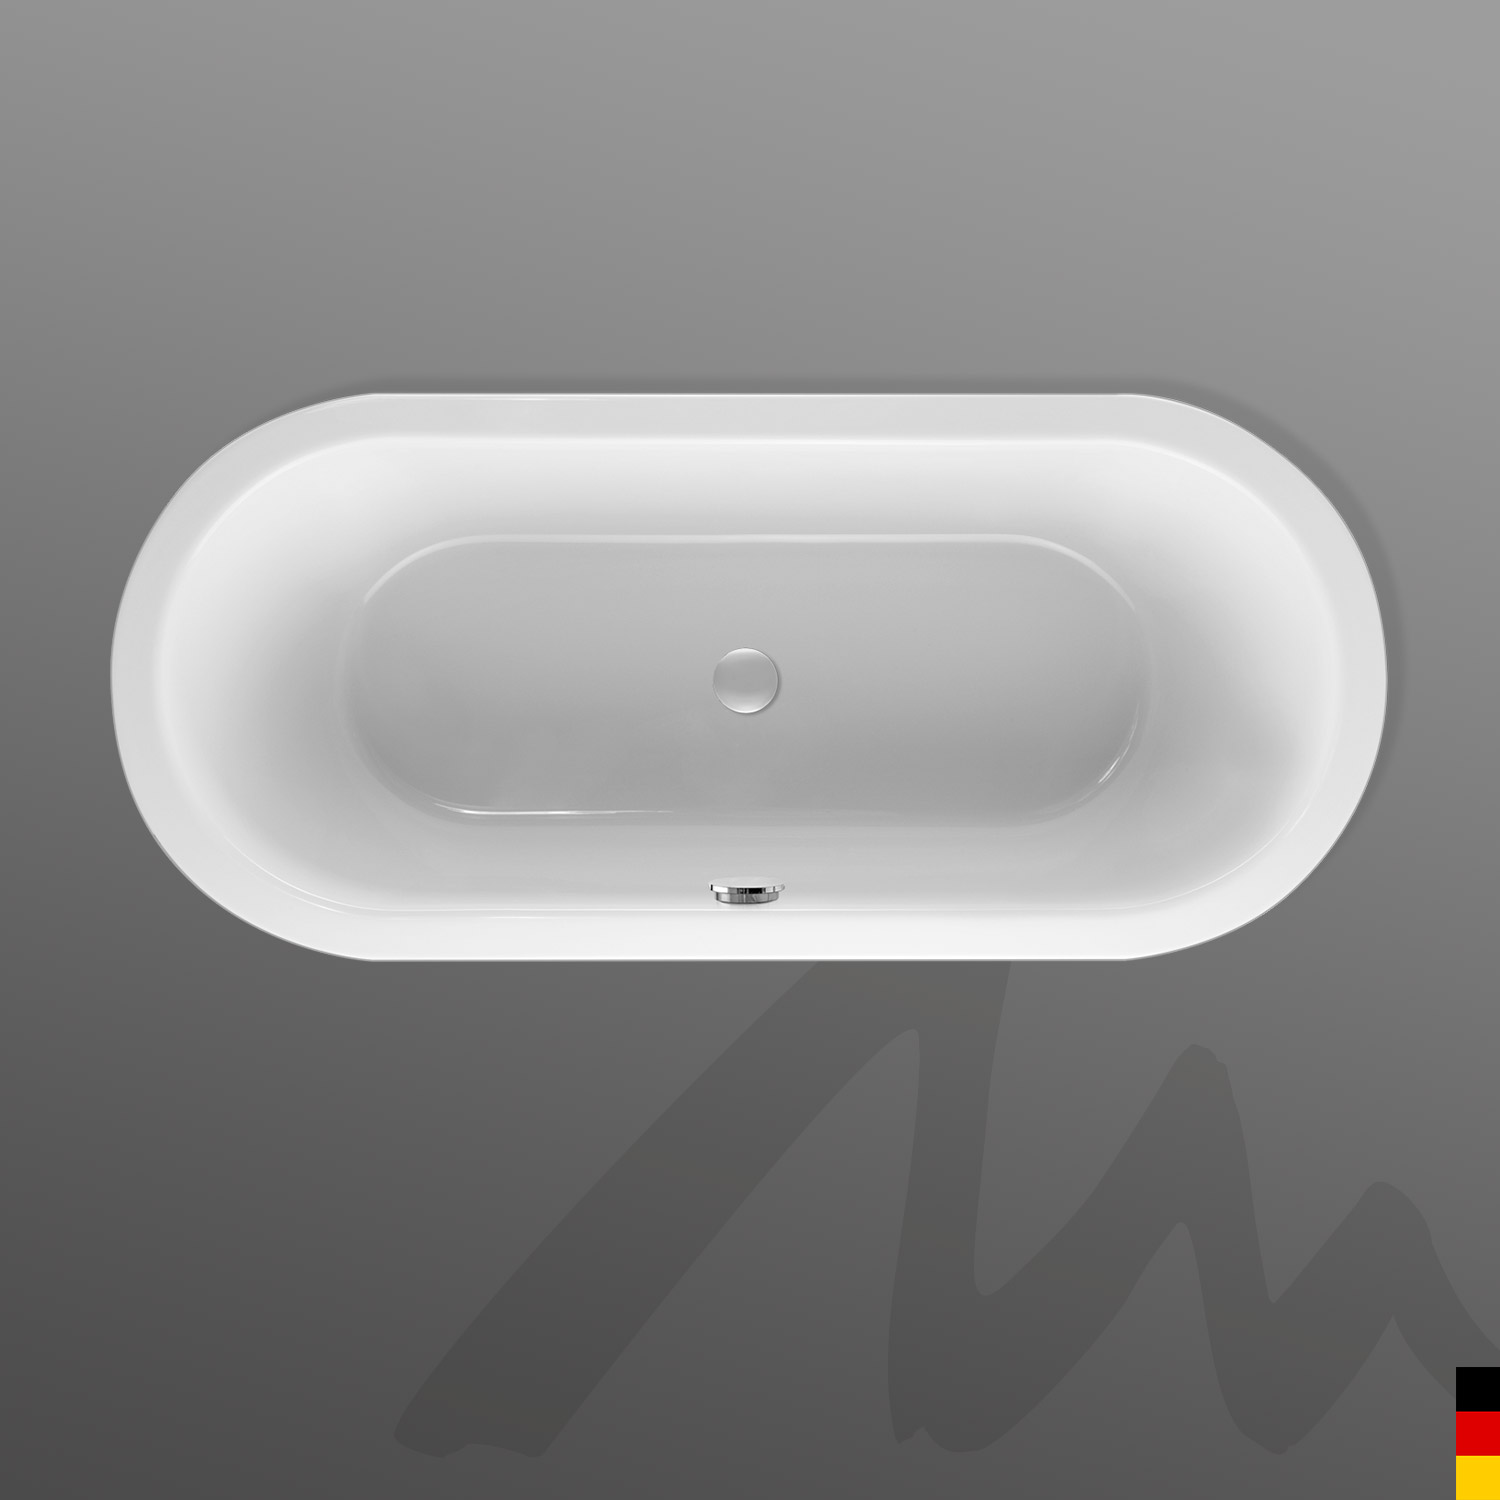 Mauersberger Badewanne Oval Crispa 170/75 duo  170x75x44cm  Farbe:weiß